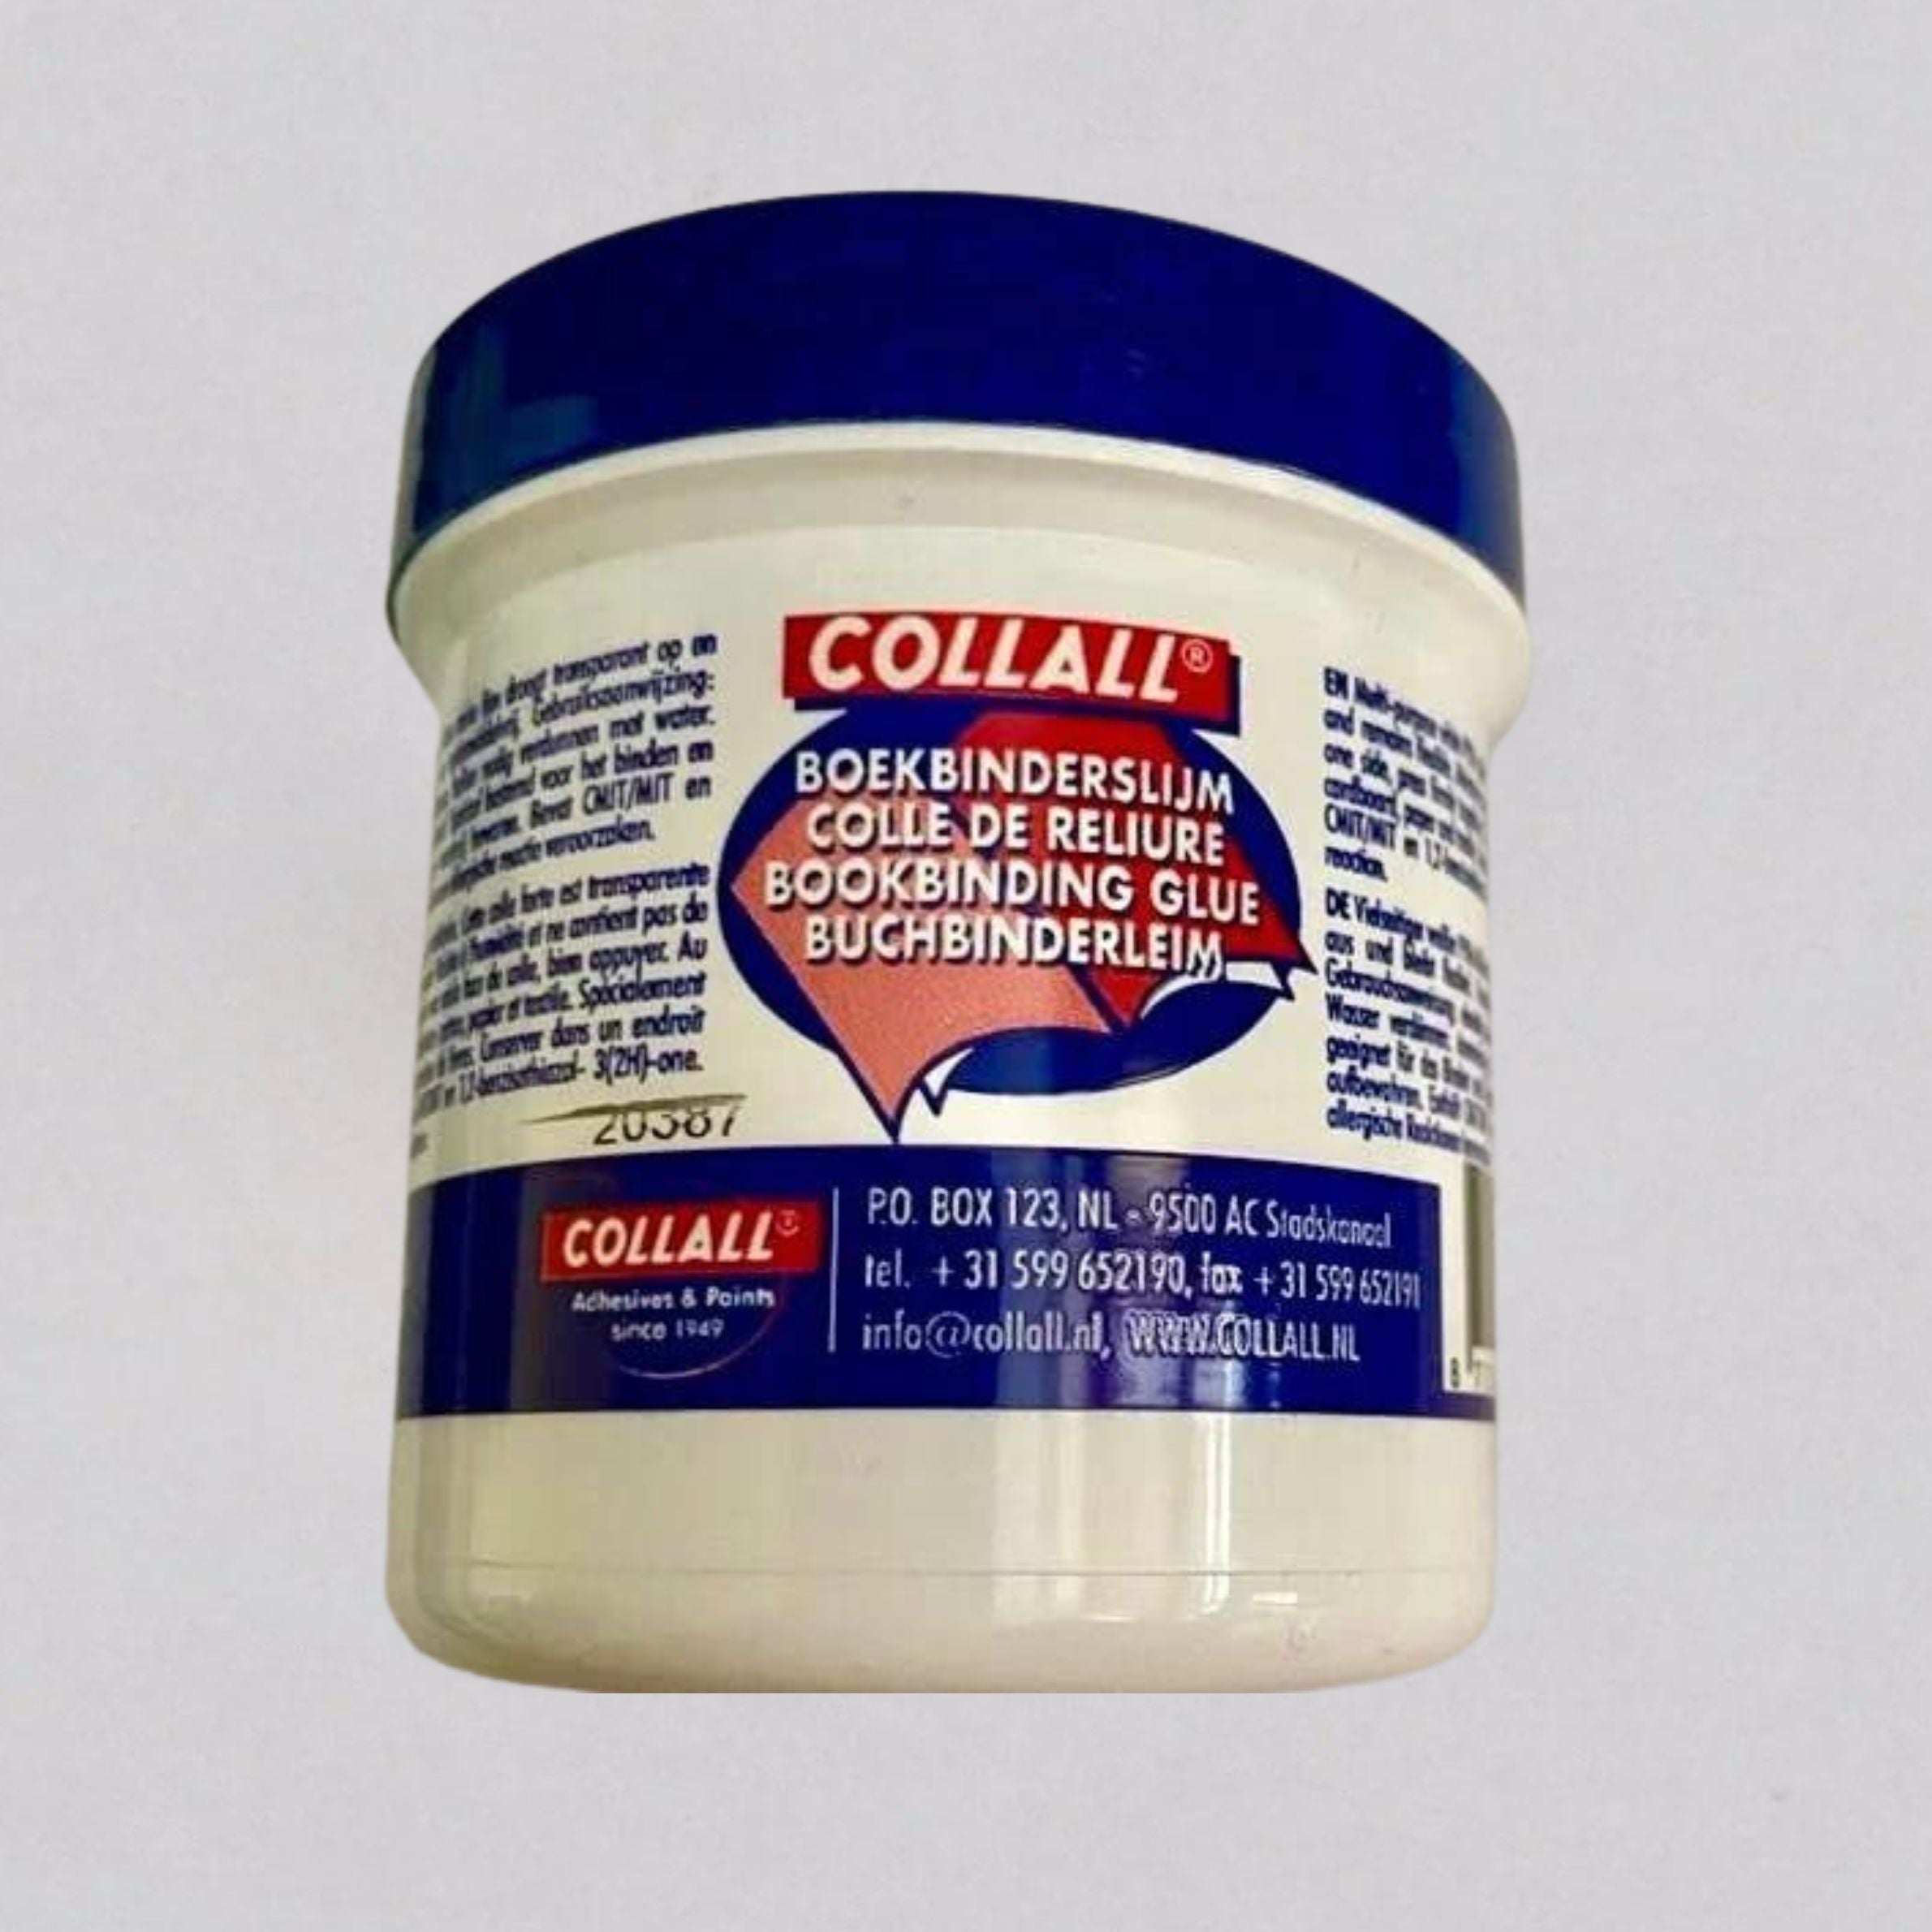 Collall Bookbinding Glue - Collall